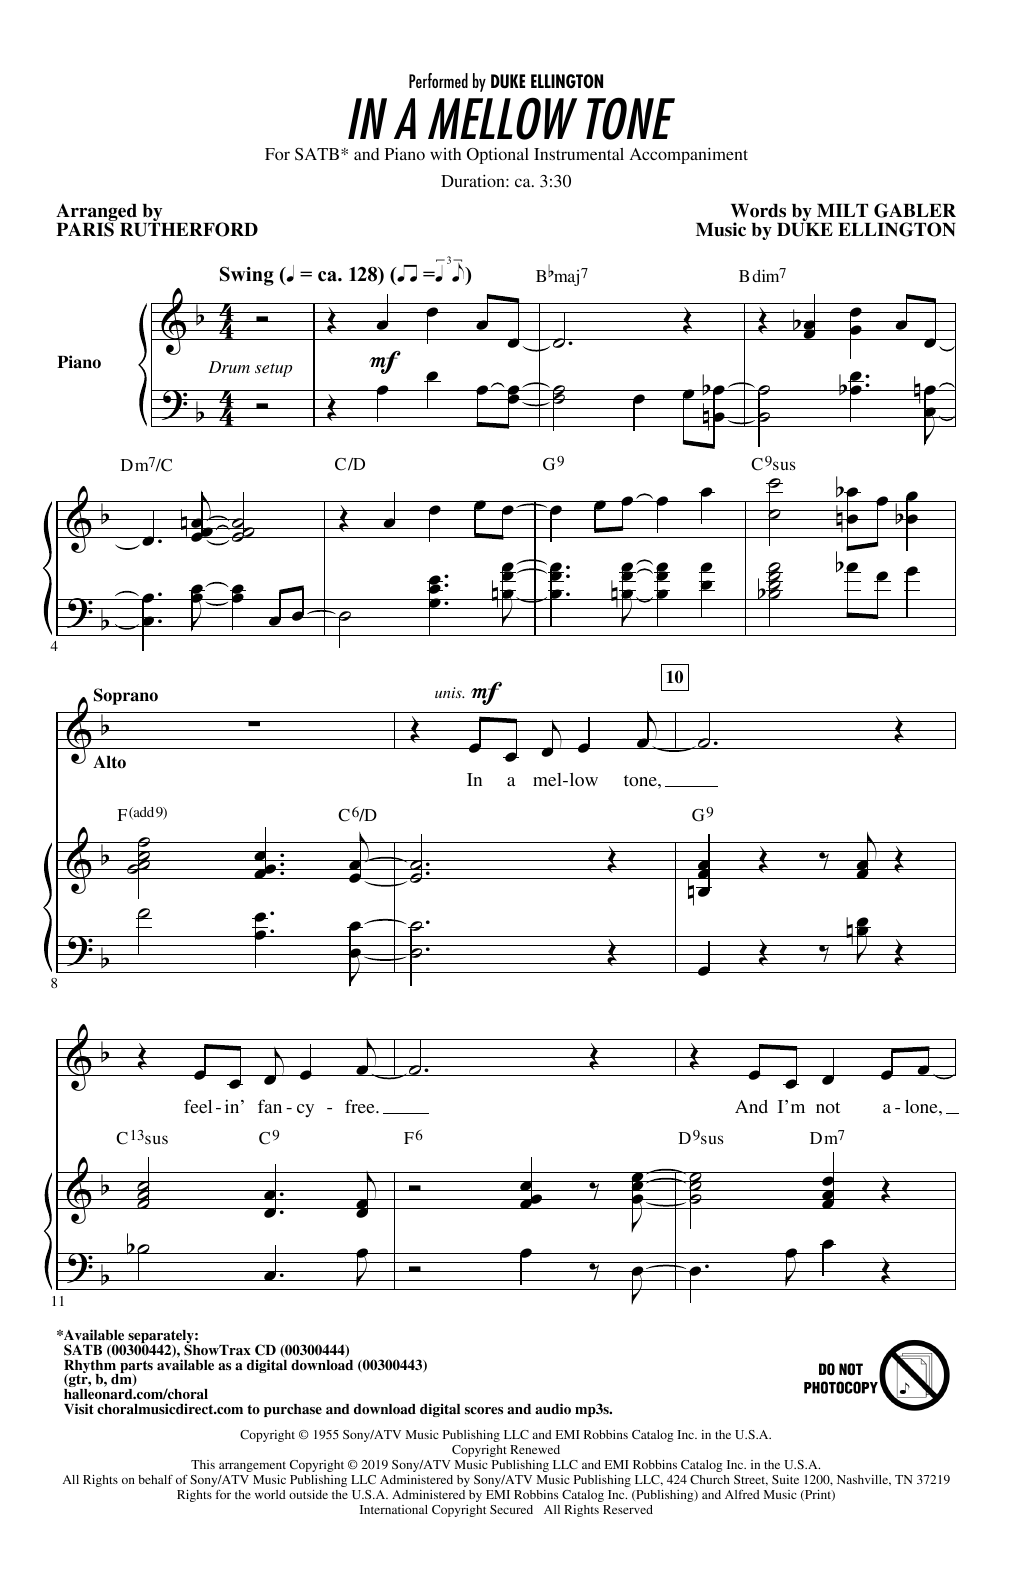 Duke Ellington In A Mellow Tone (arr. Paris Rutherford) sheet music notes and chords arranged for SATB Choir